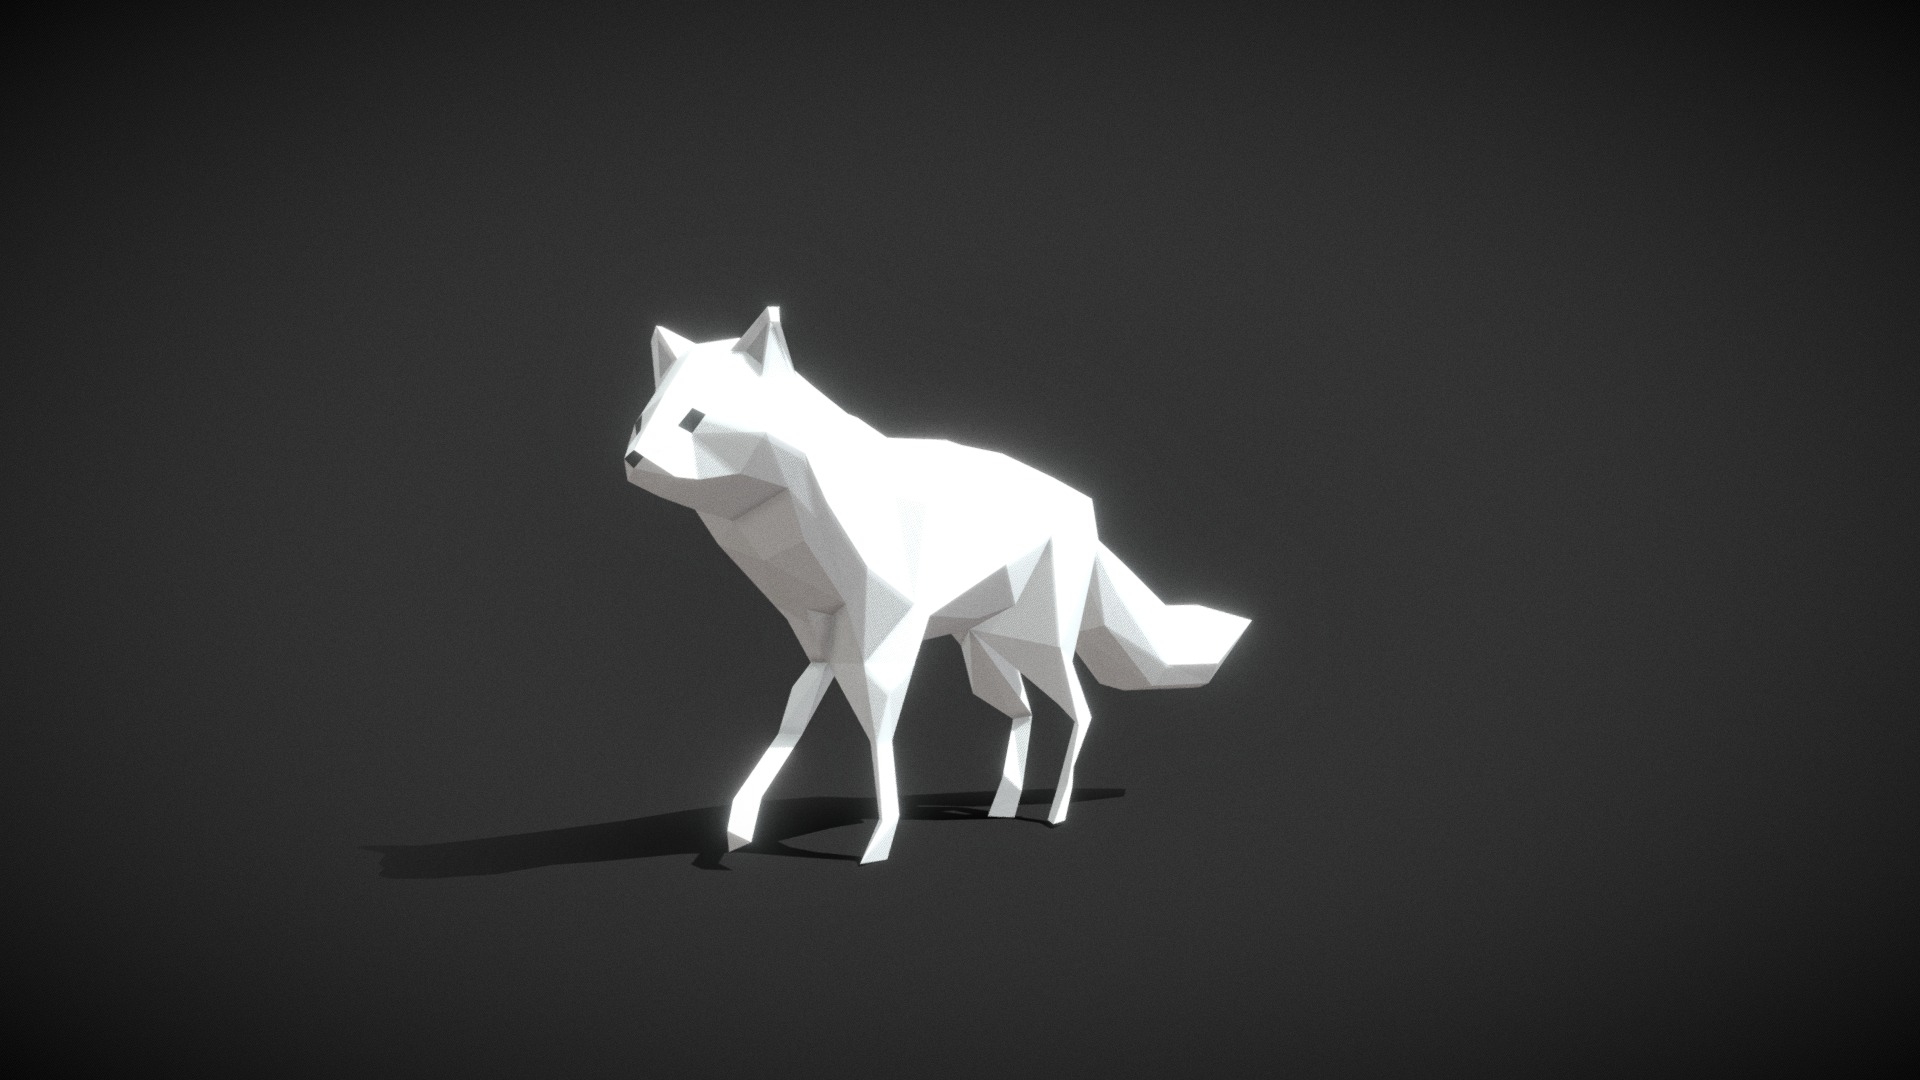 3D model #3December – Arctic Fox - This is a 3D model of the #3December - Arctic Fox. The 3D model is about a white horse sculpture.